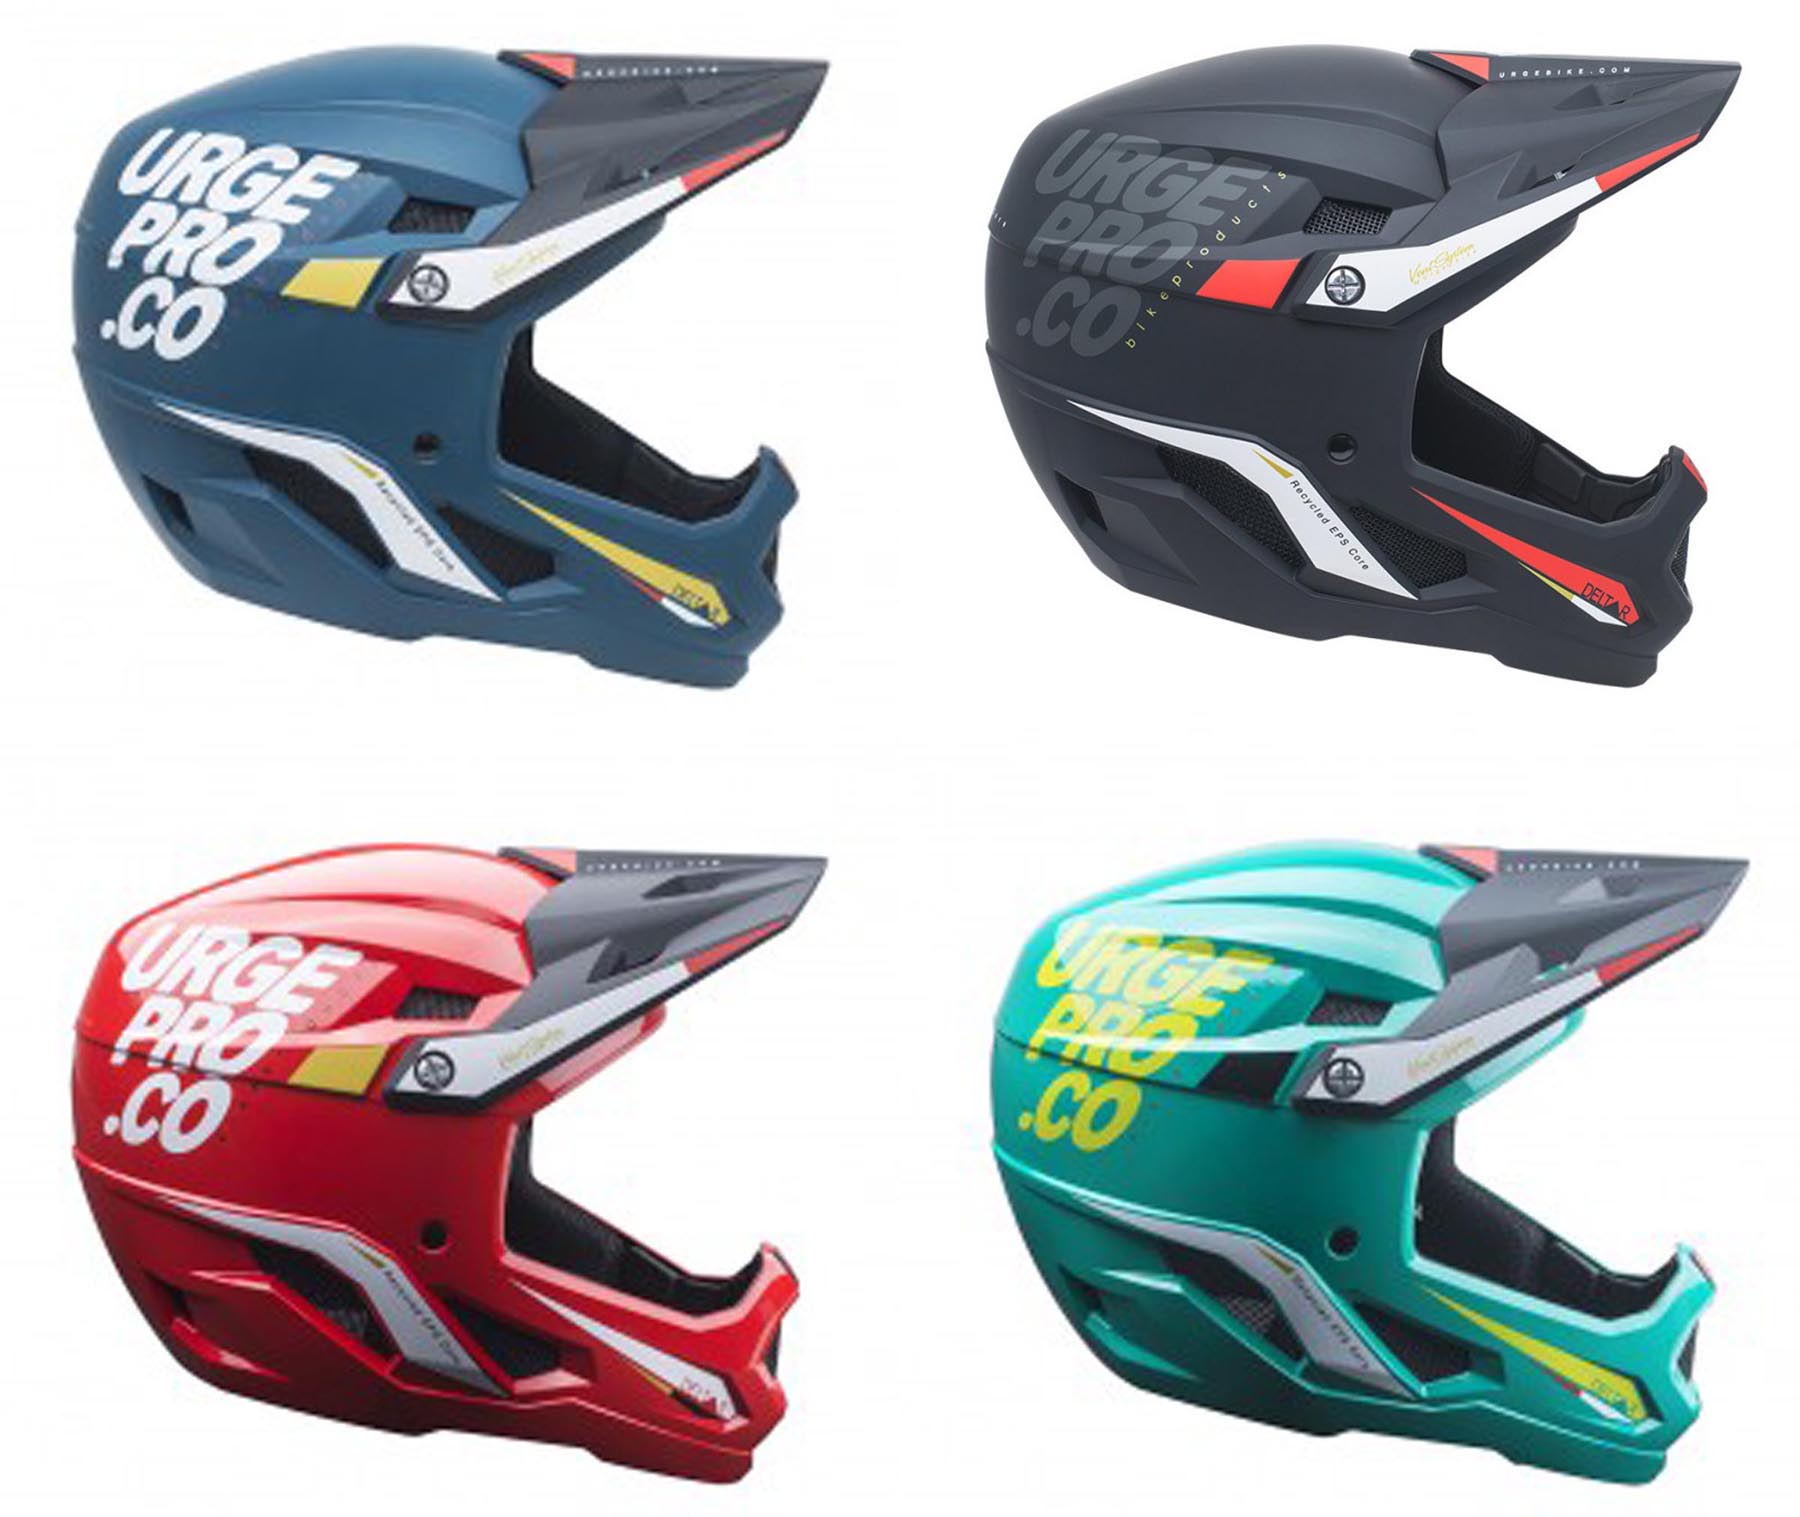 Urge BP Deltar helmet full face helmet four colors available